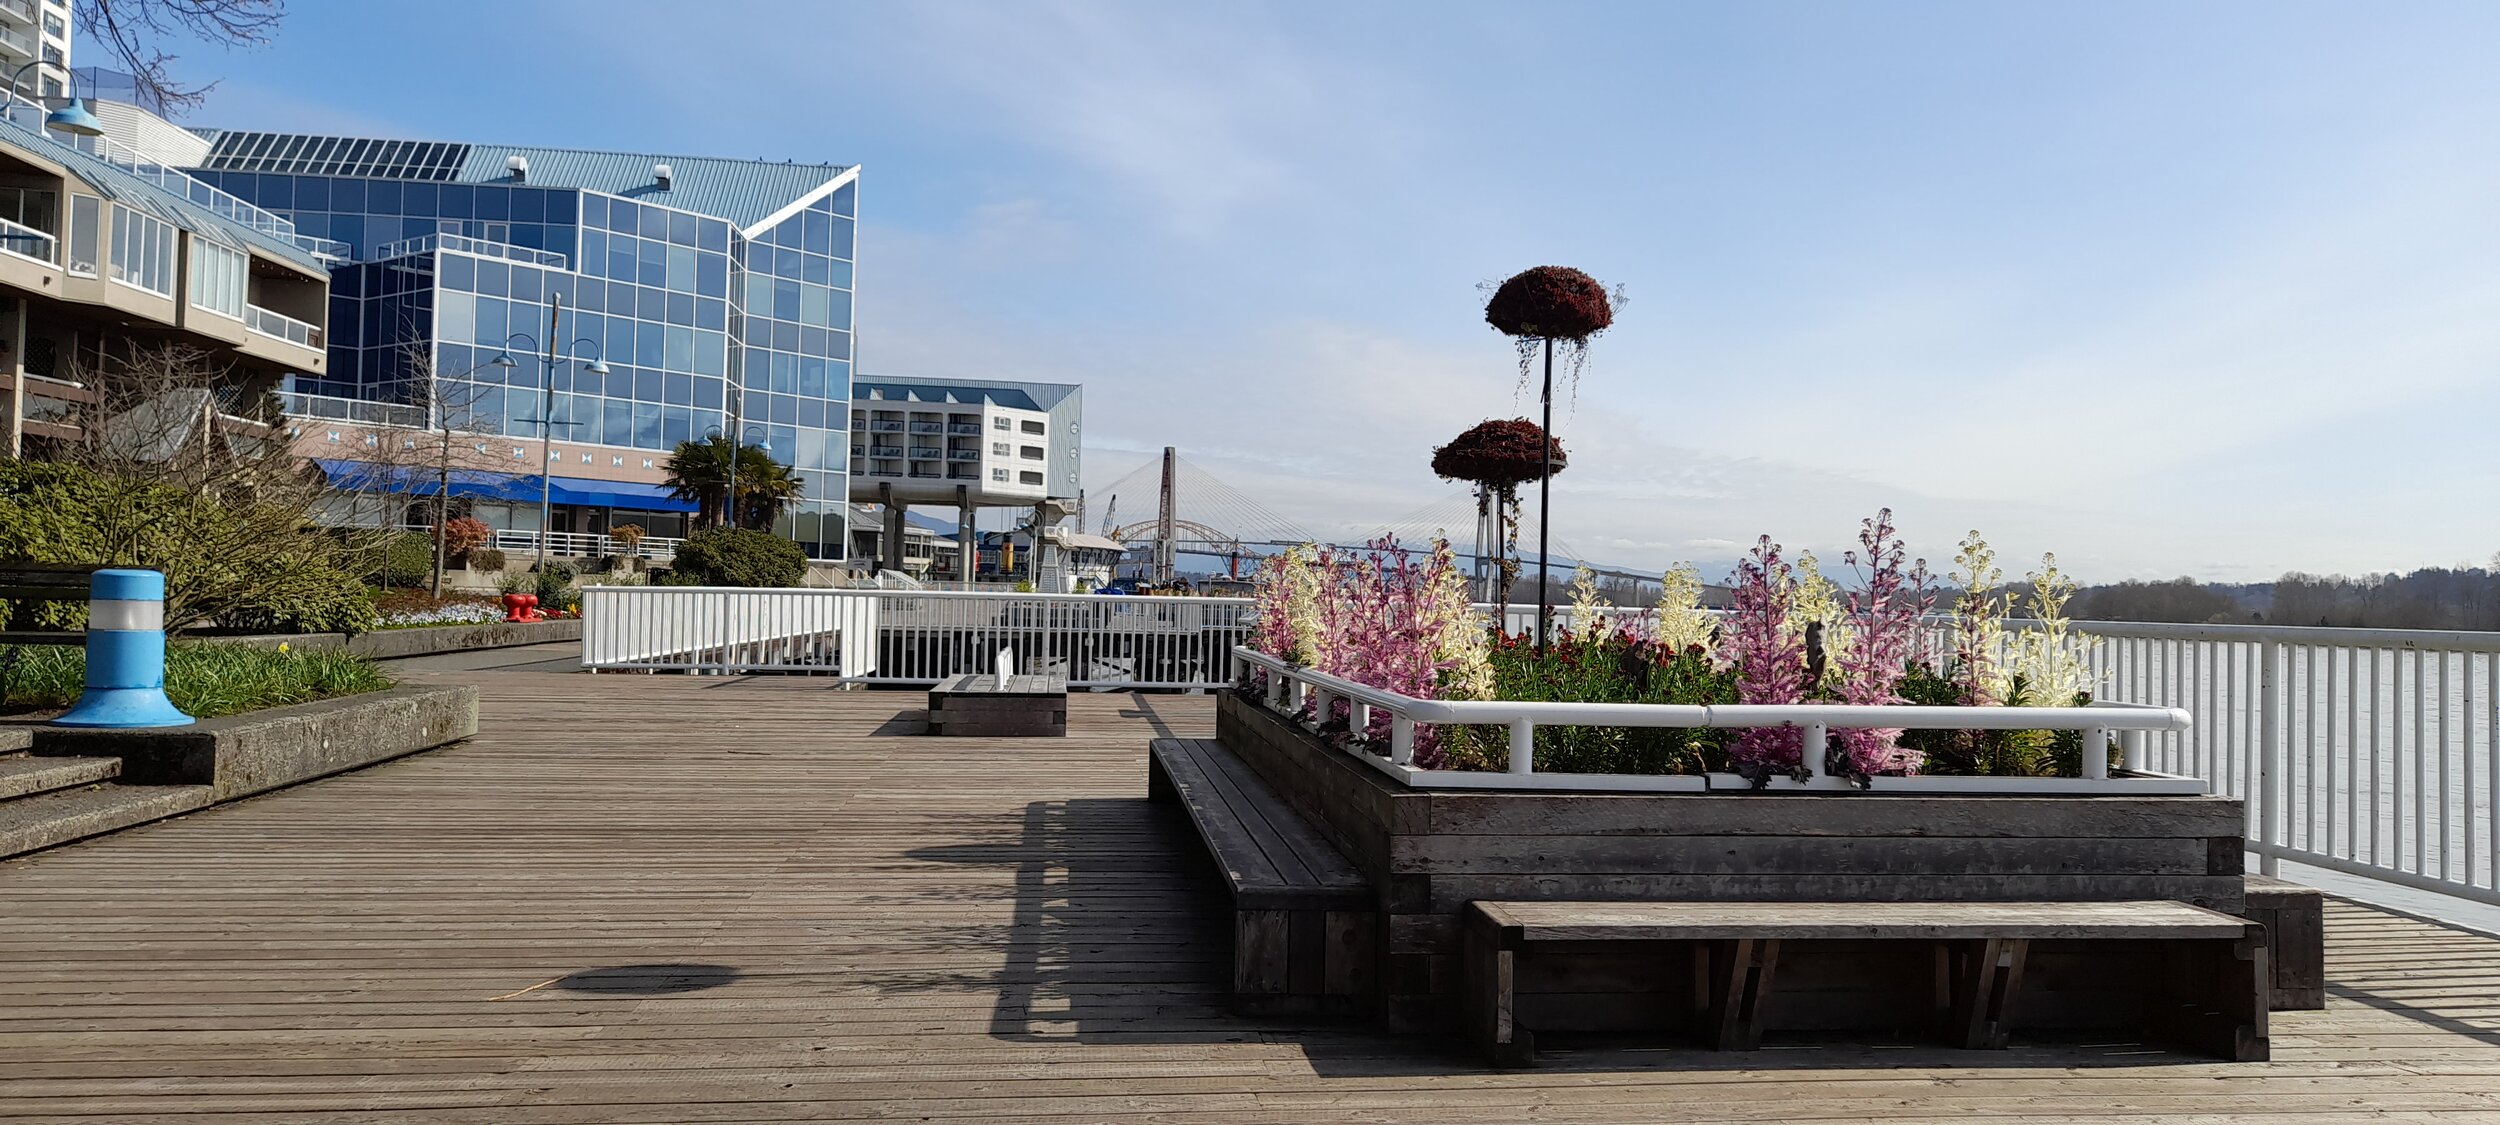 Boardwalk and flower beds